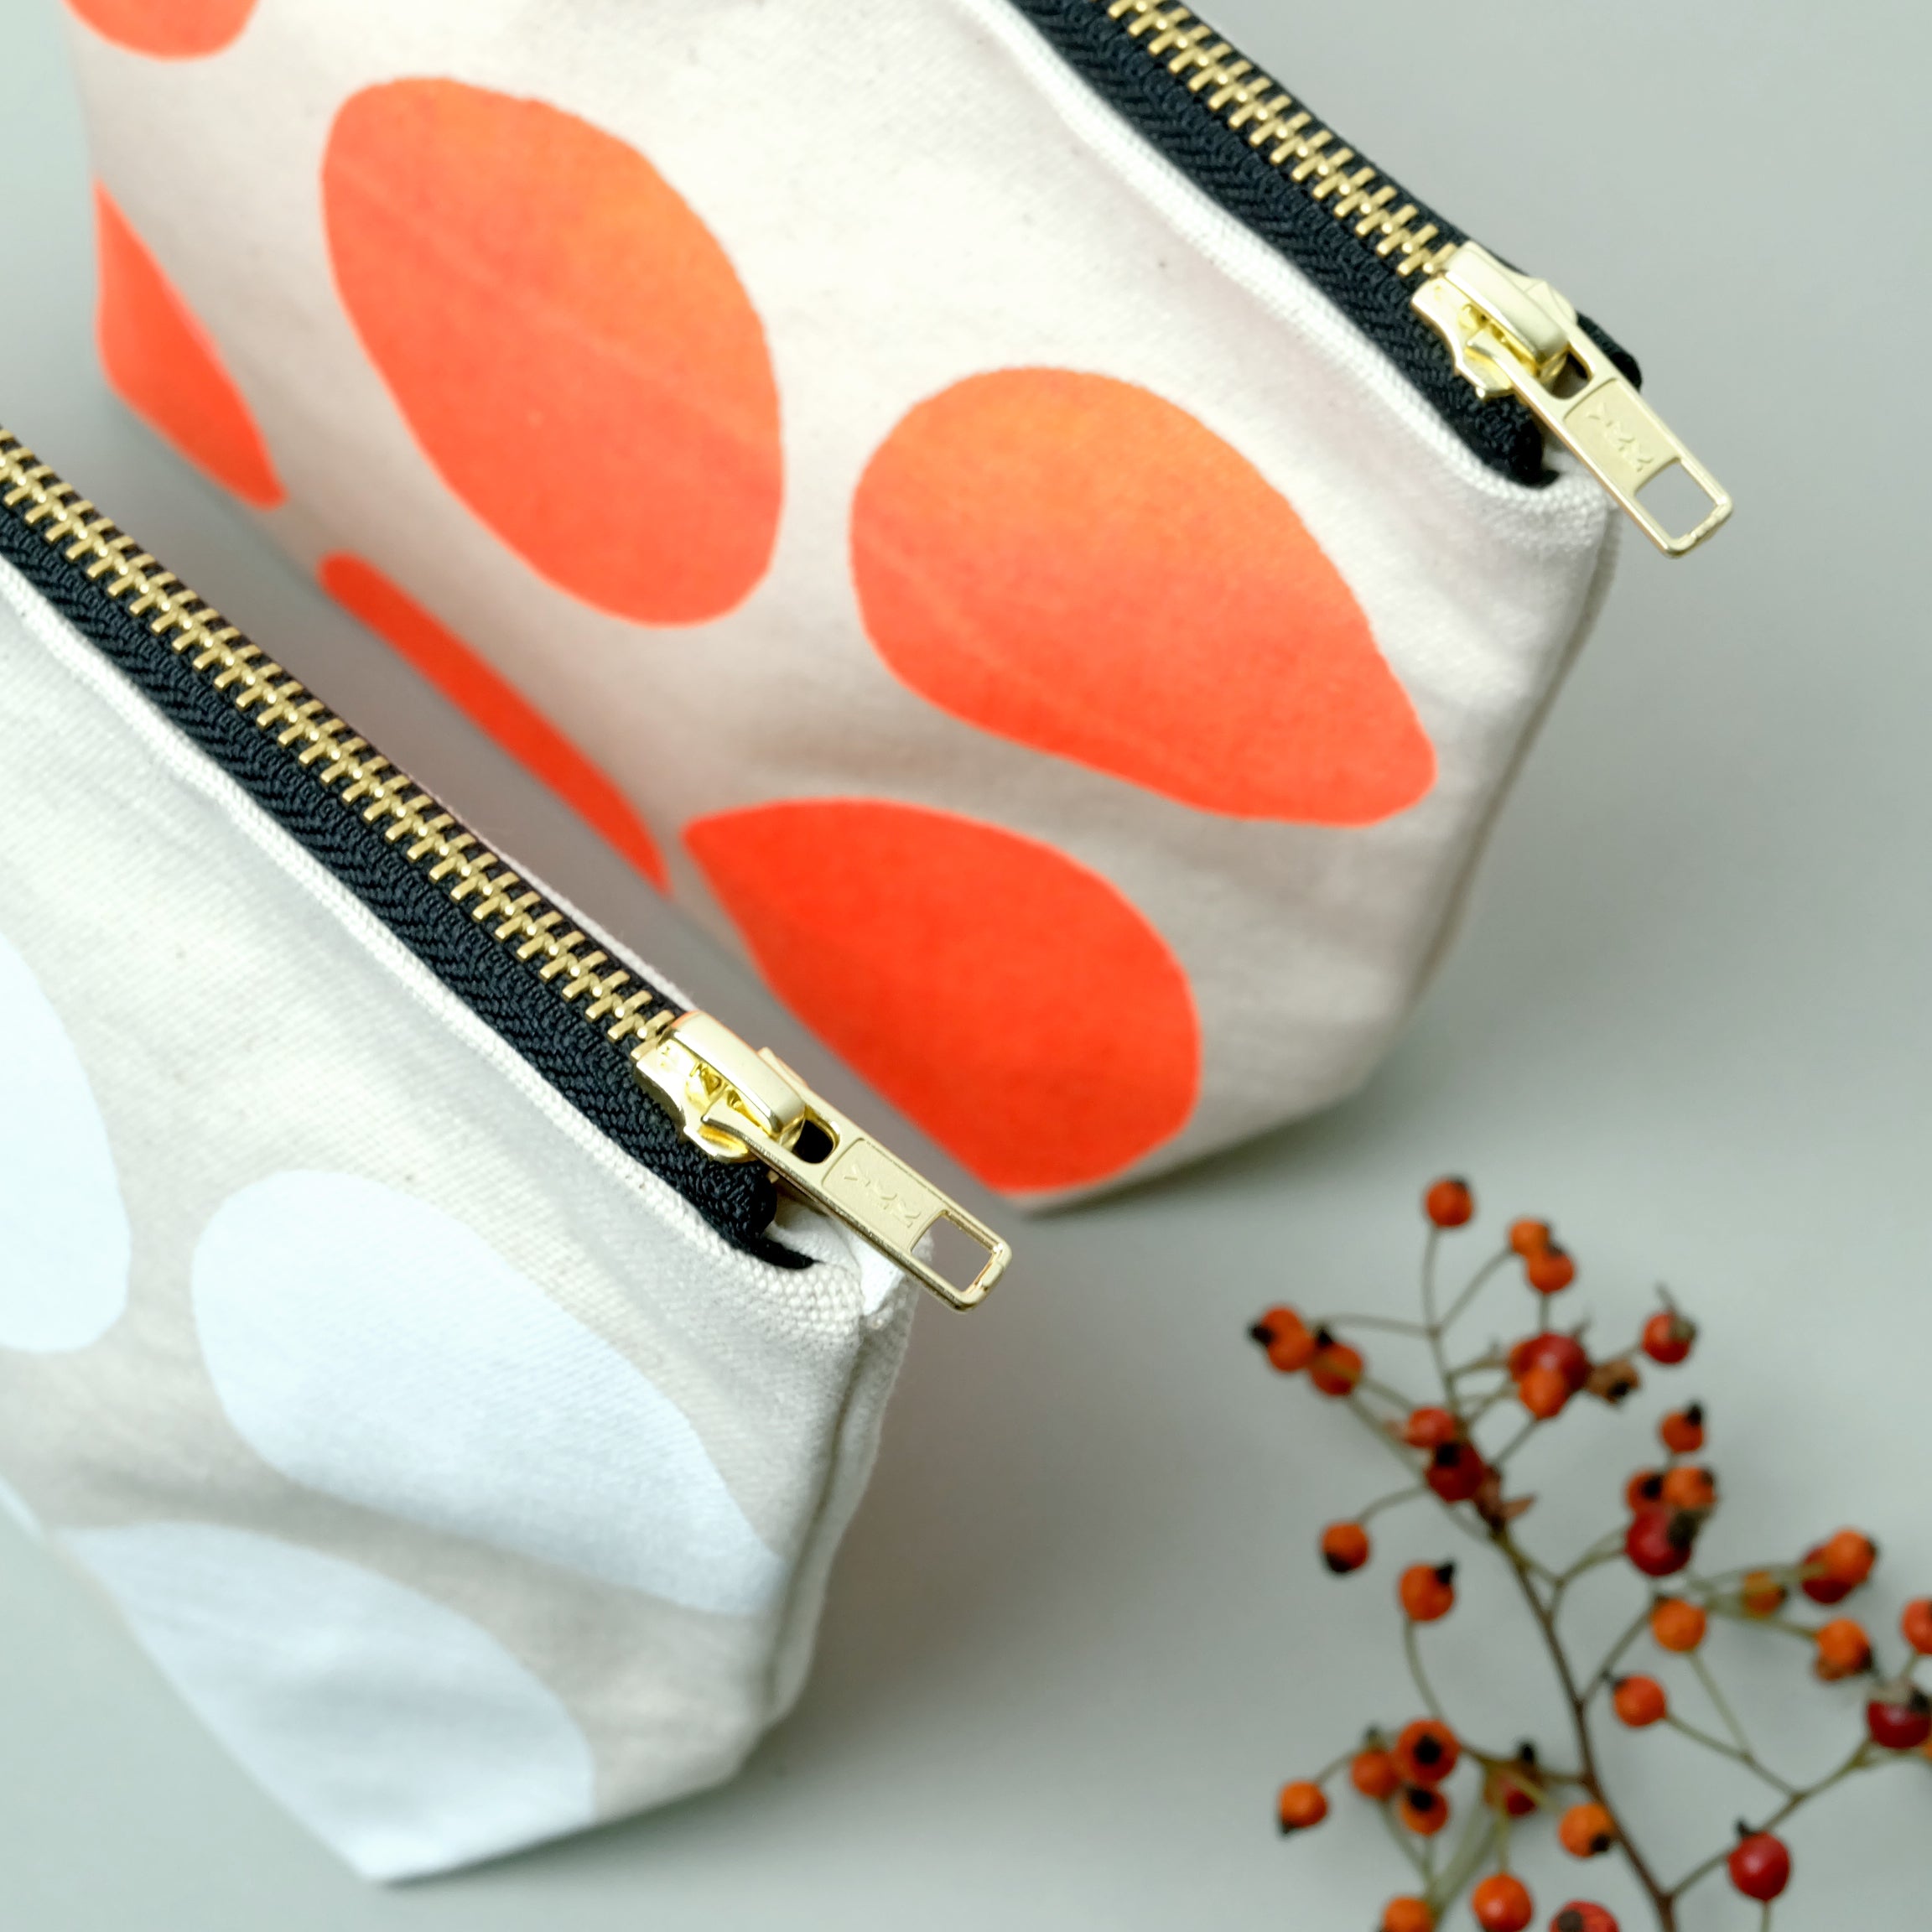 Big polka dot canvas pouch - Summer Made